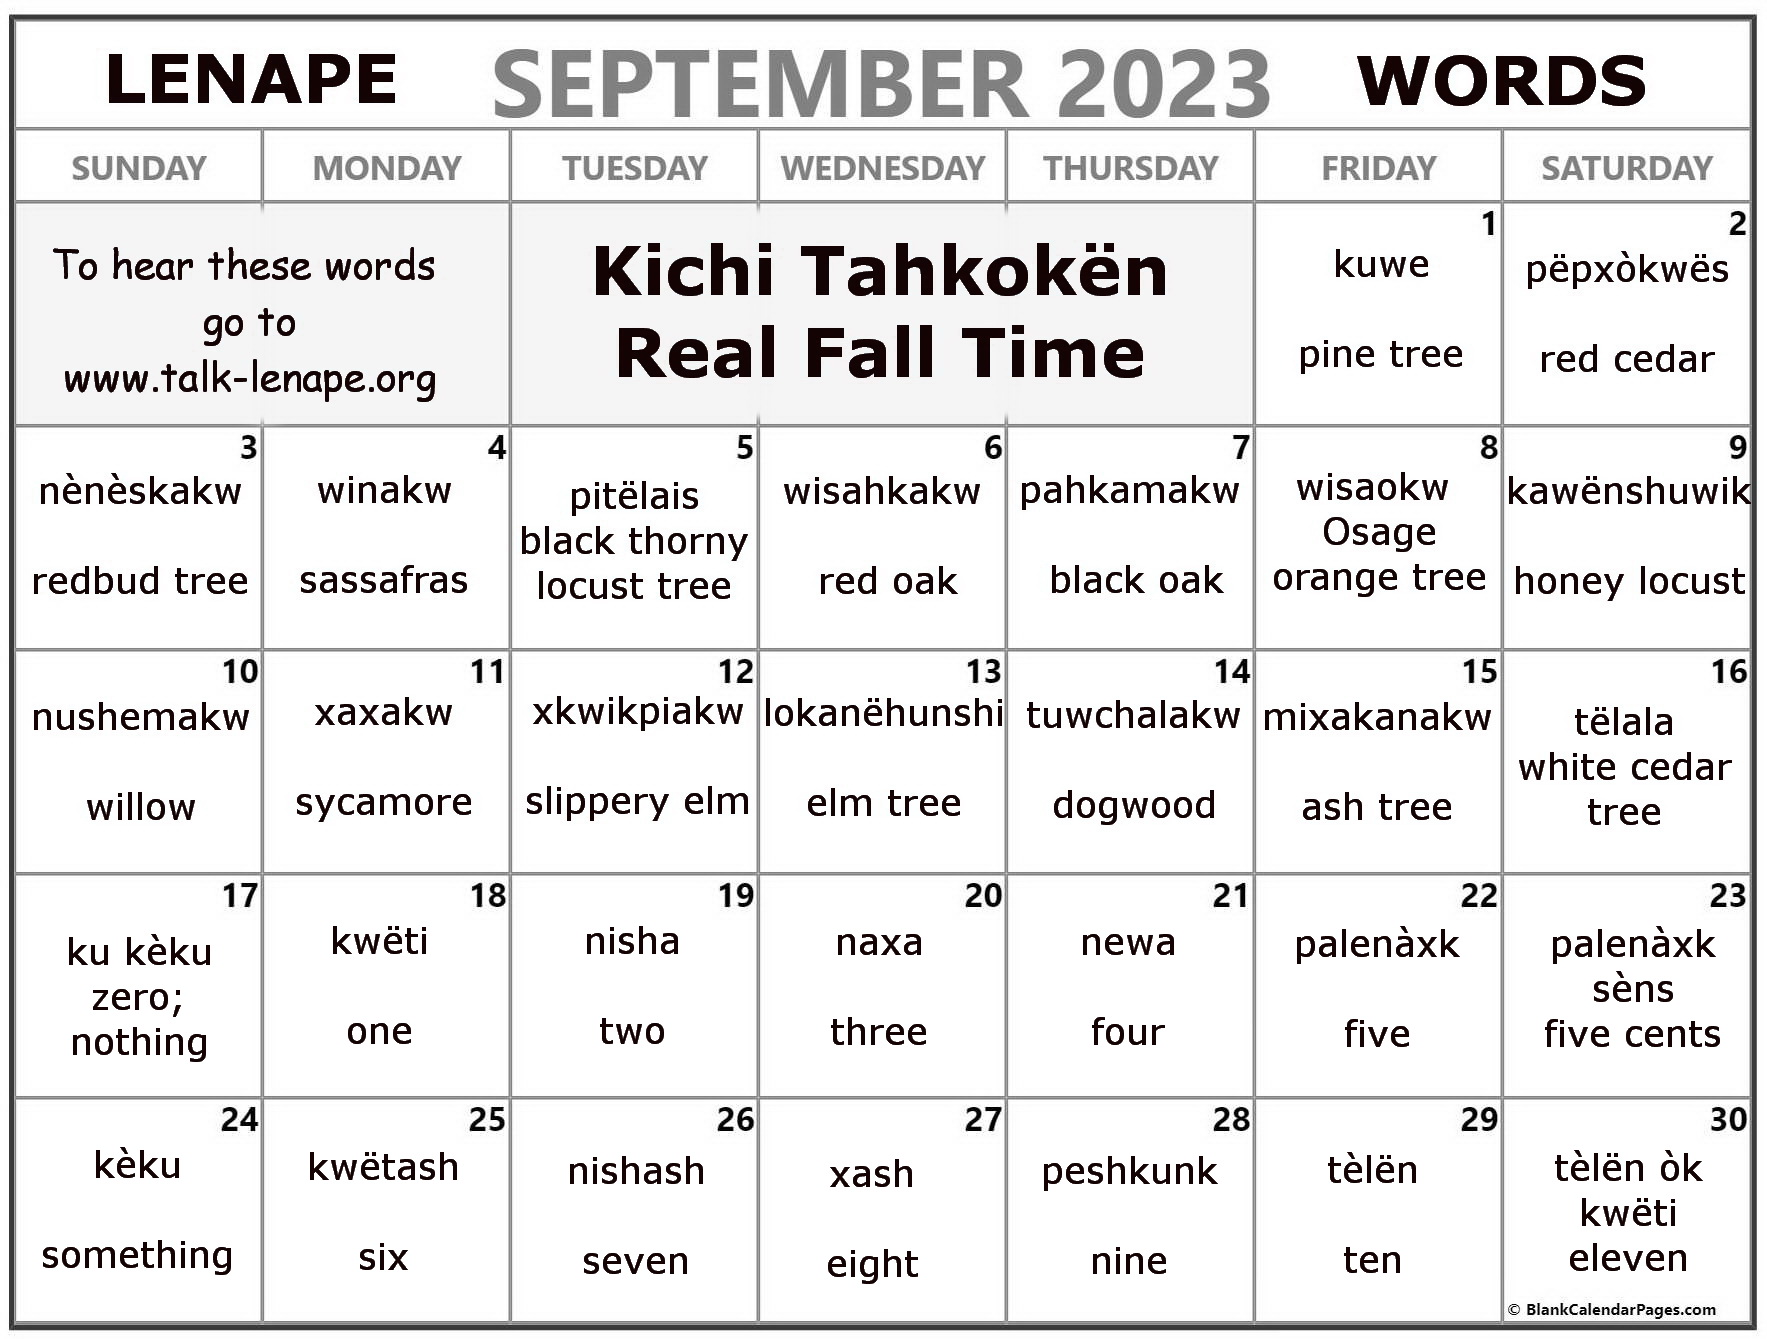 September 2023 Lenape Word-a-Day Calendar